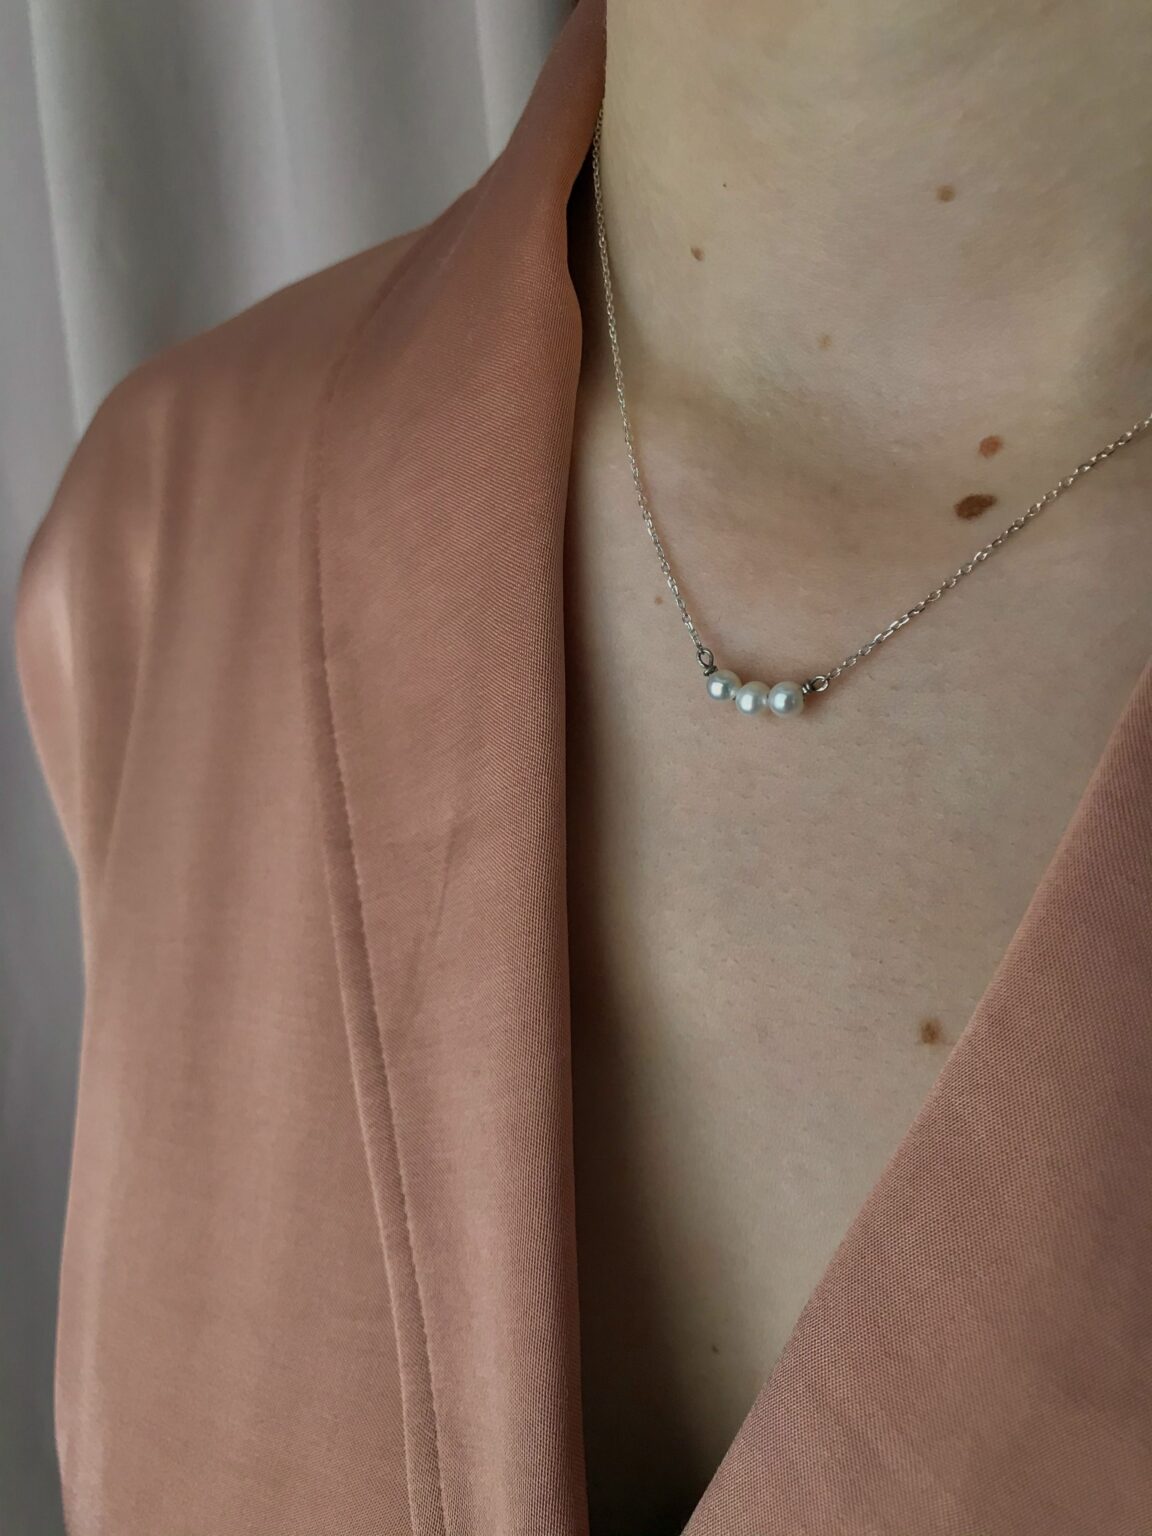 The Mama Kin - Berta necklace